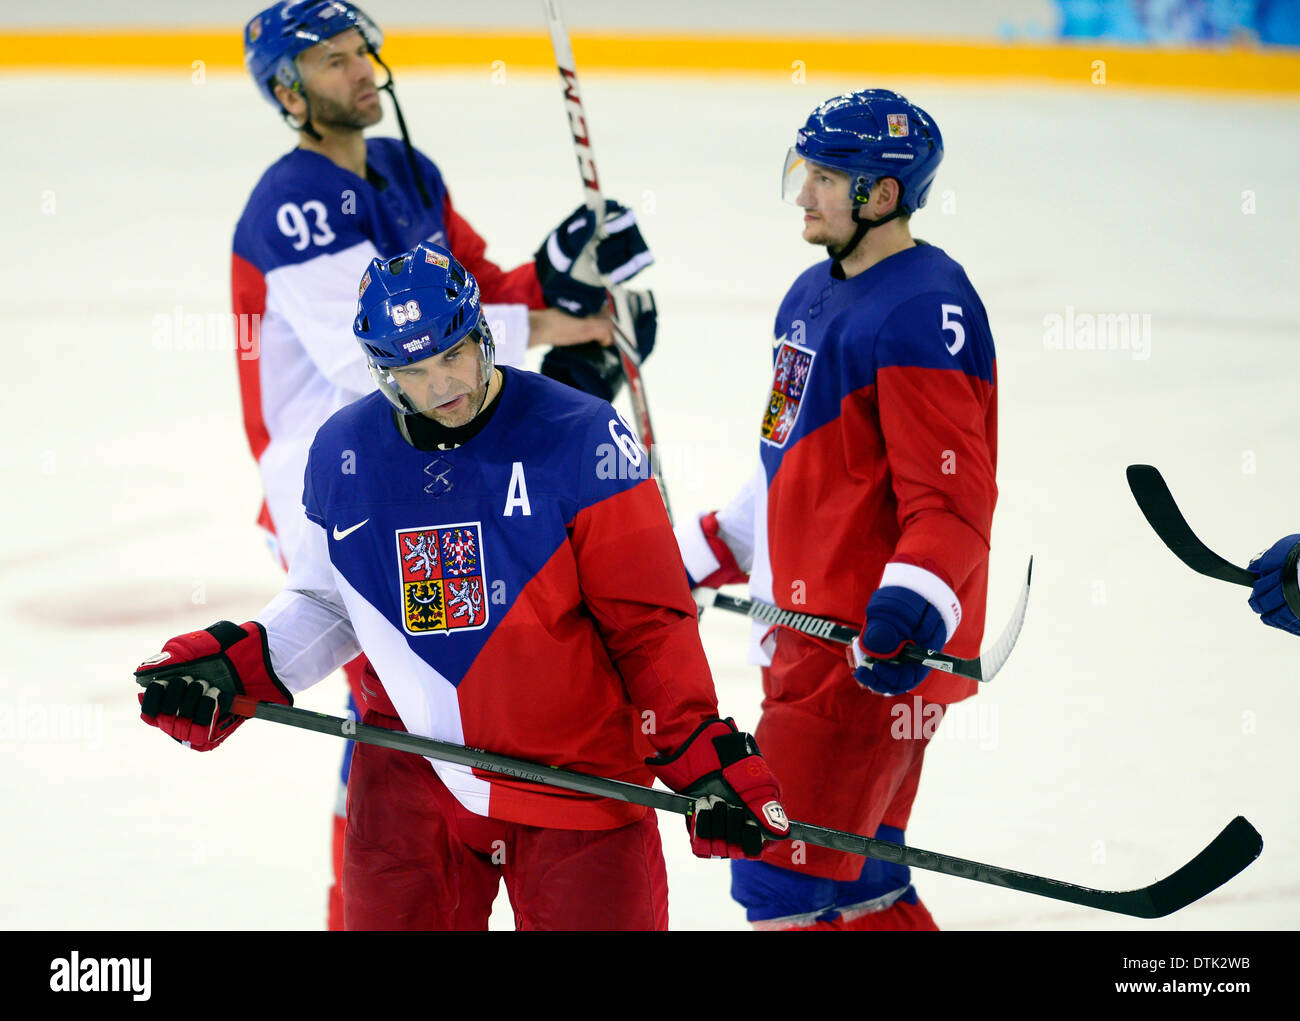 Czech Republic after the match. Ice Hockey, quarterfinal Czech Republic vs USA during the 2014 Winter Olympics in Sochi